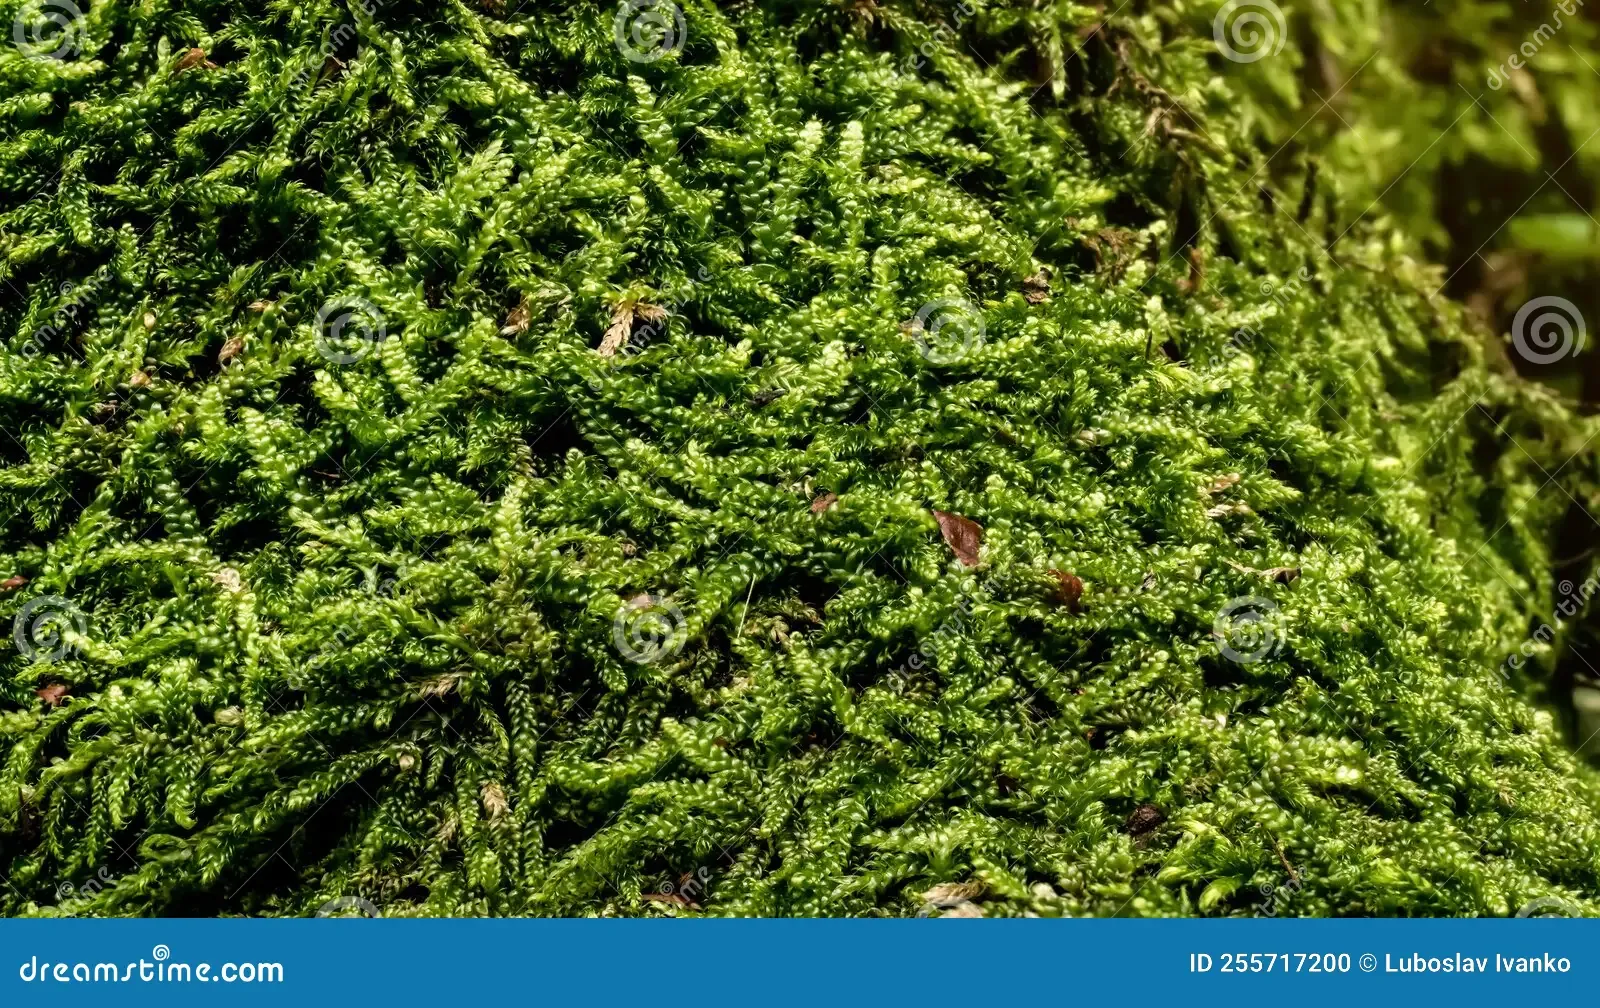 fine-green-moss-ctenidium-species-growing-forest-tree-closeup-macro-detail-fine-green-moss-ctenidium-species-growing-255717200.jpg